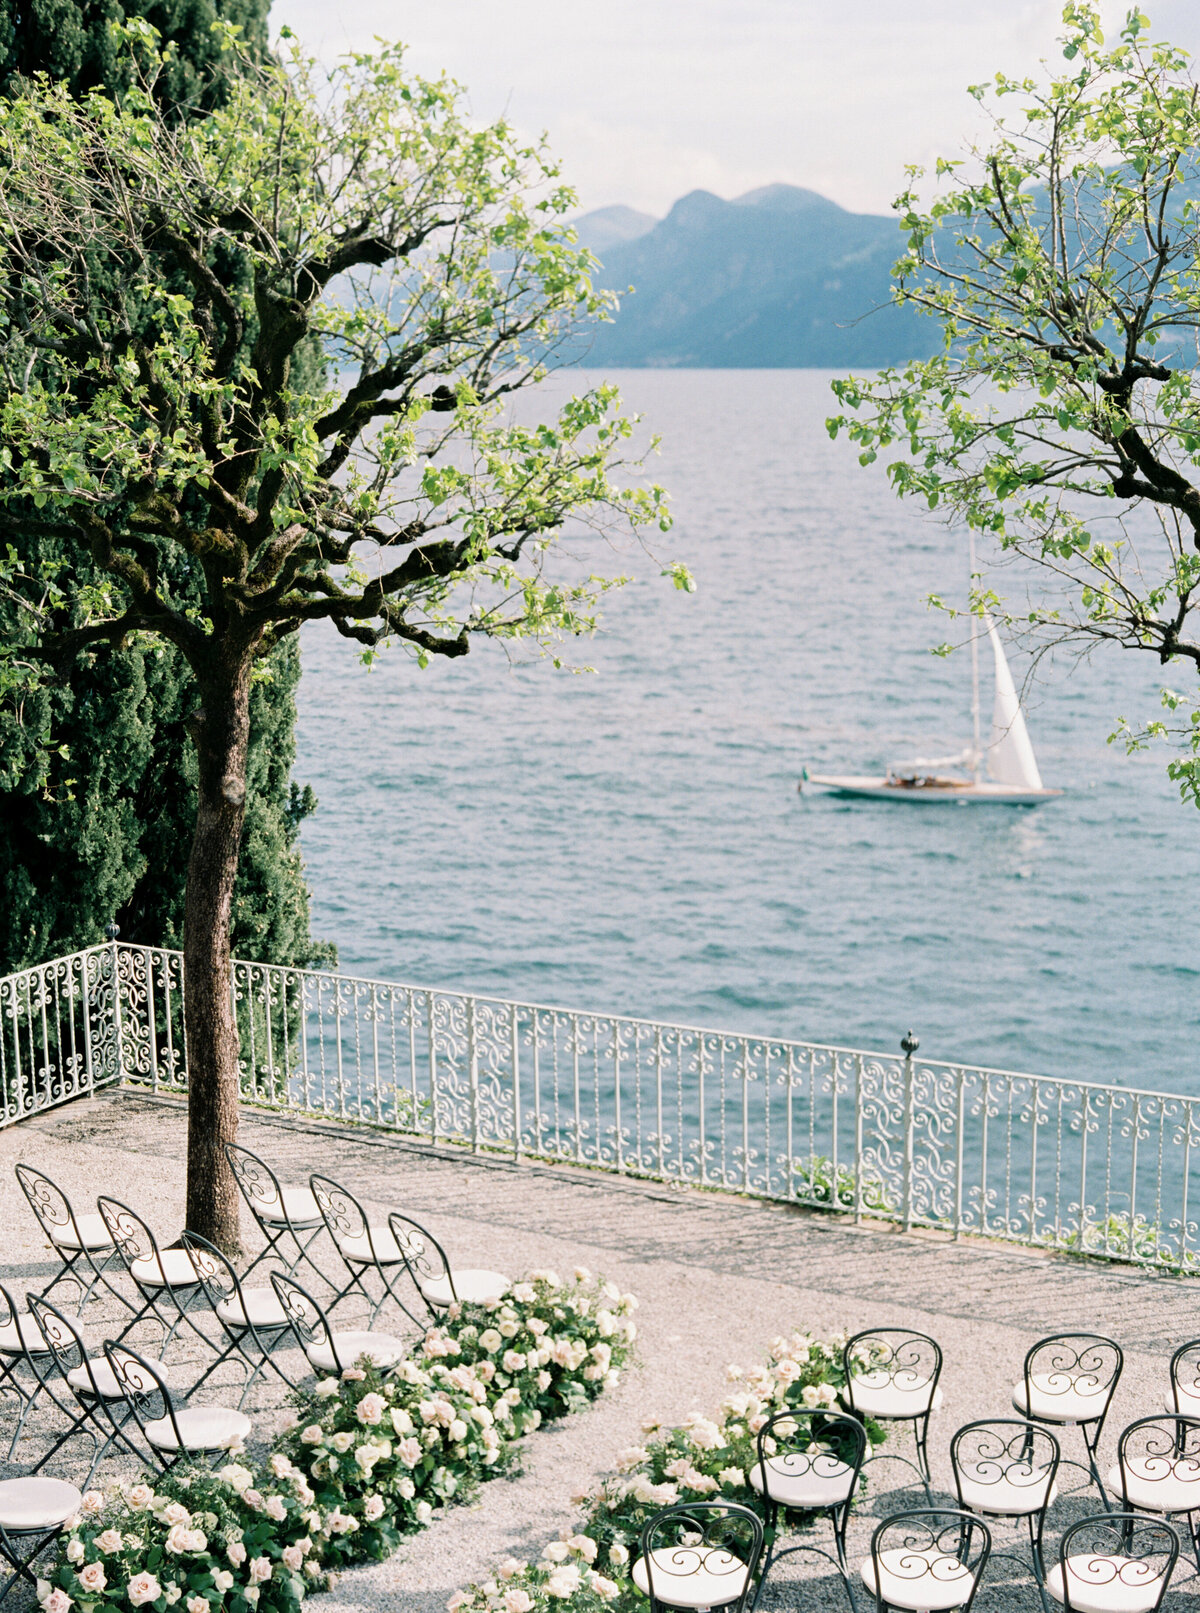 Villa Cipressi Wedding - Lake Como Photographer - Janna Brown